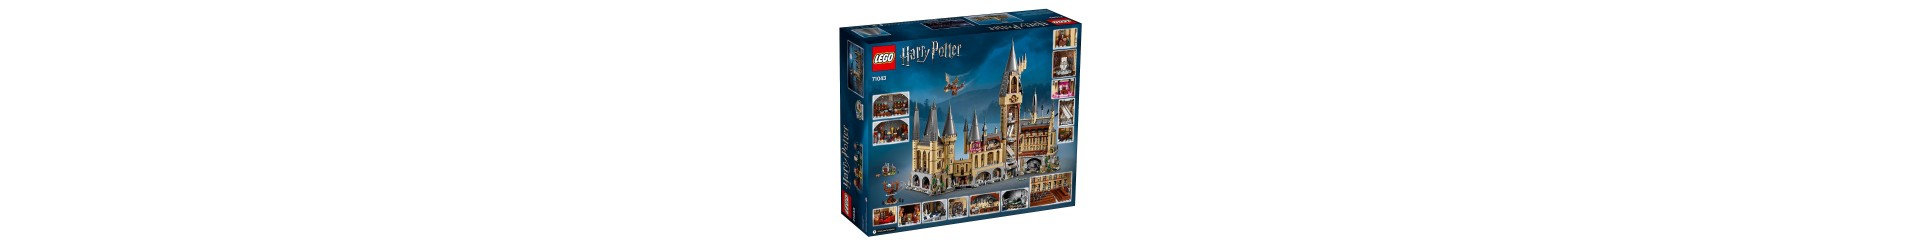 LEGO HARRY POTTER avventure magiche Harry Potter Hermione Hermione